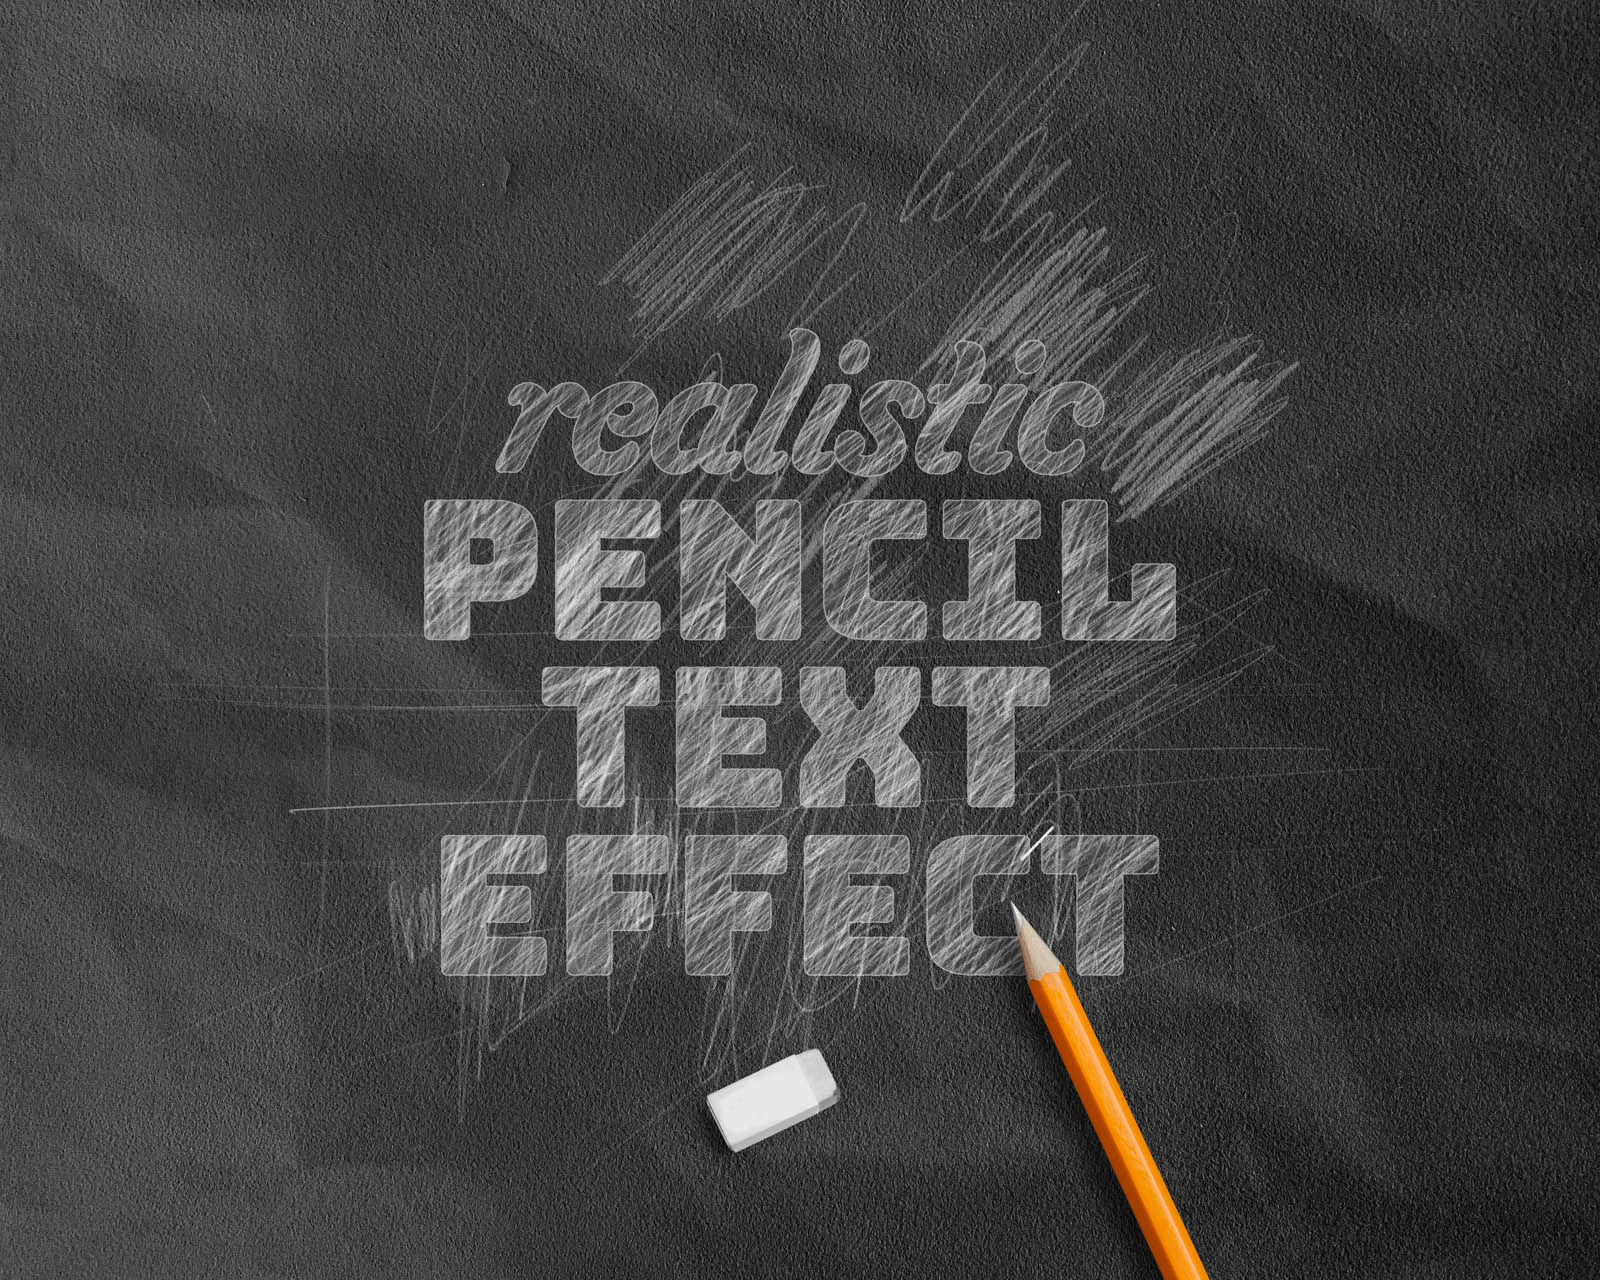 Photoshop Pencil Sketch Effect